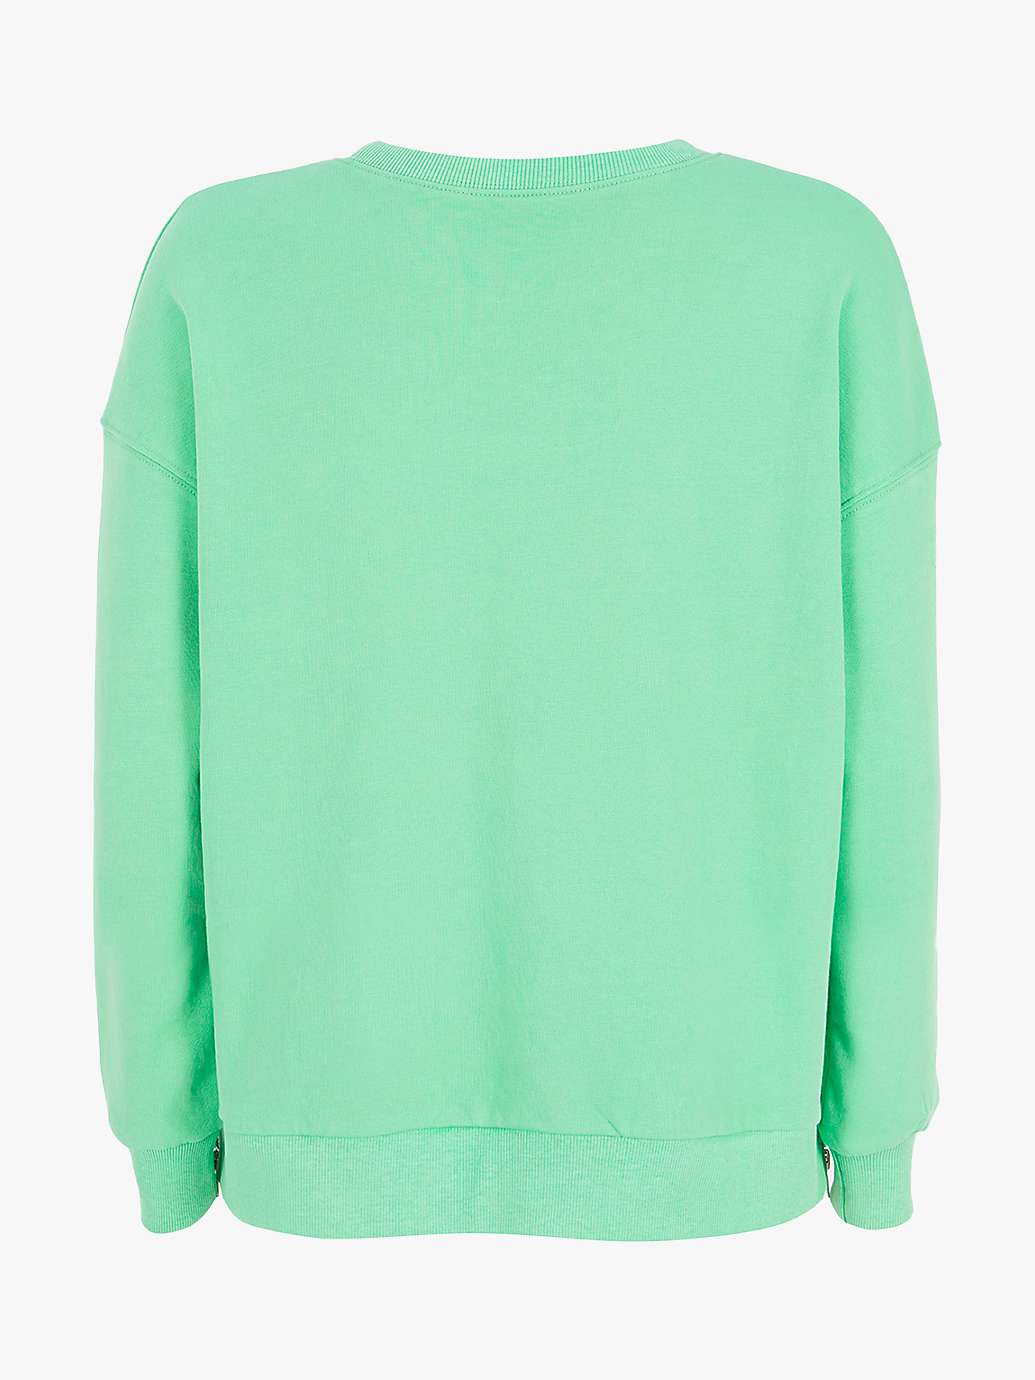 Mint Velvet Relaxed Fit Sweatshirt, Green at John Lewis & Partners